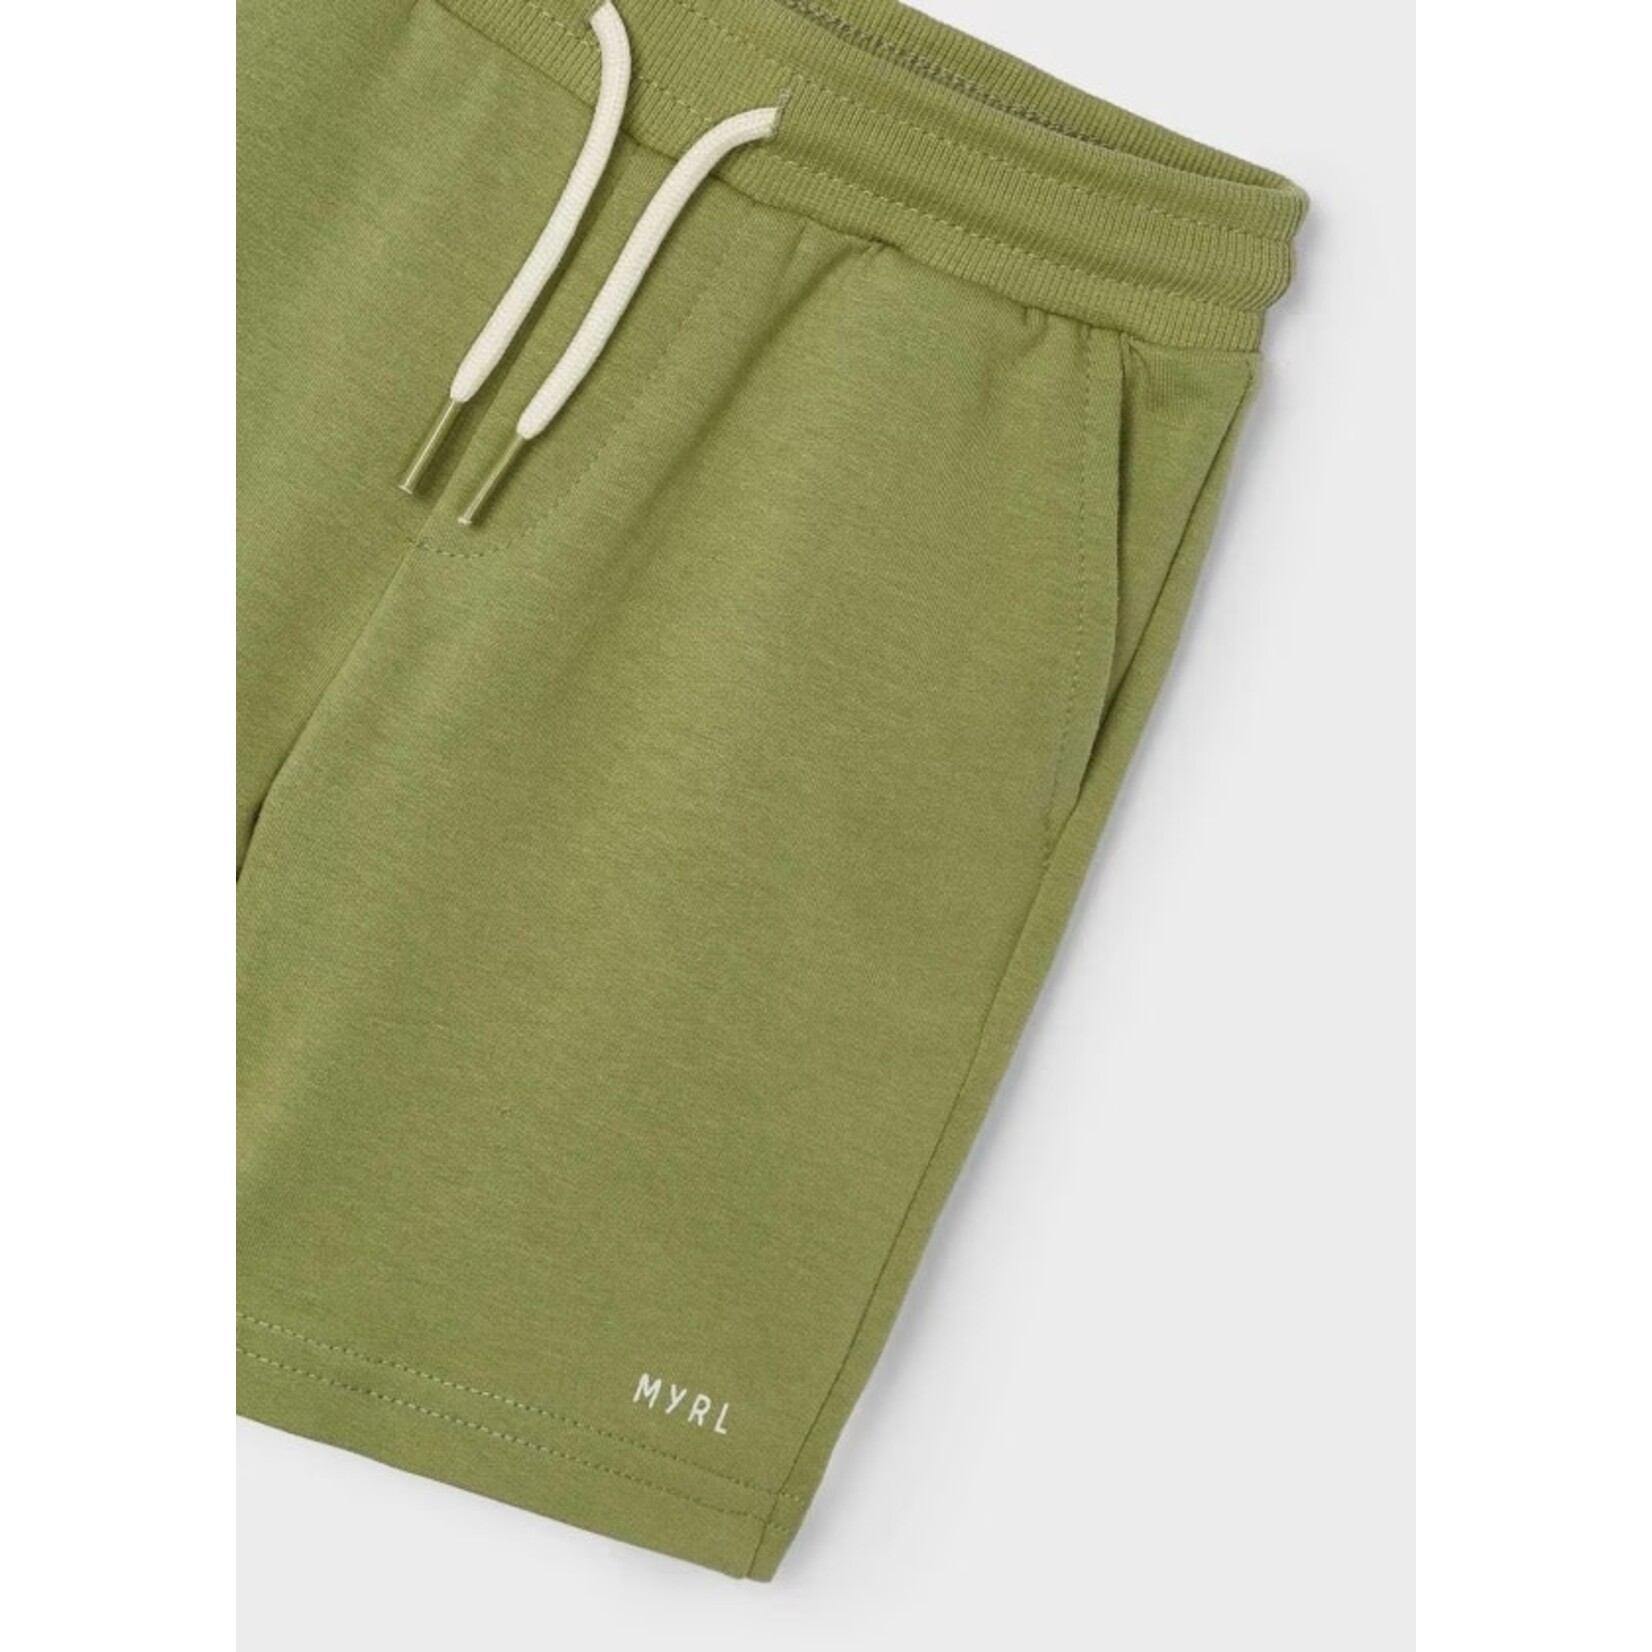 Mayoral MAYORAL - Cotton jersey shorts - Sage green